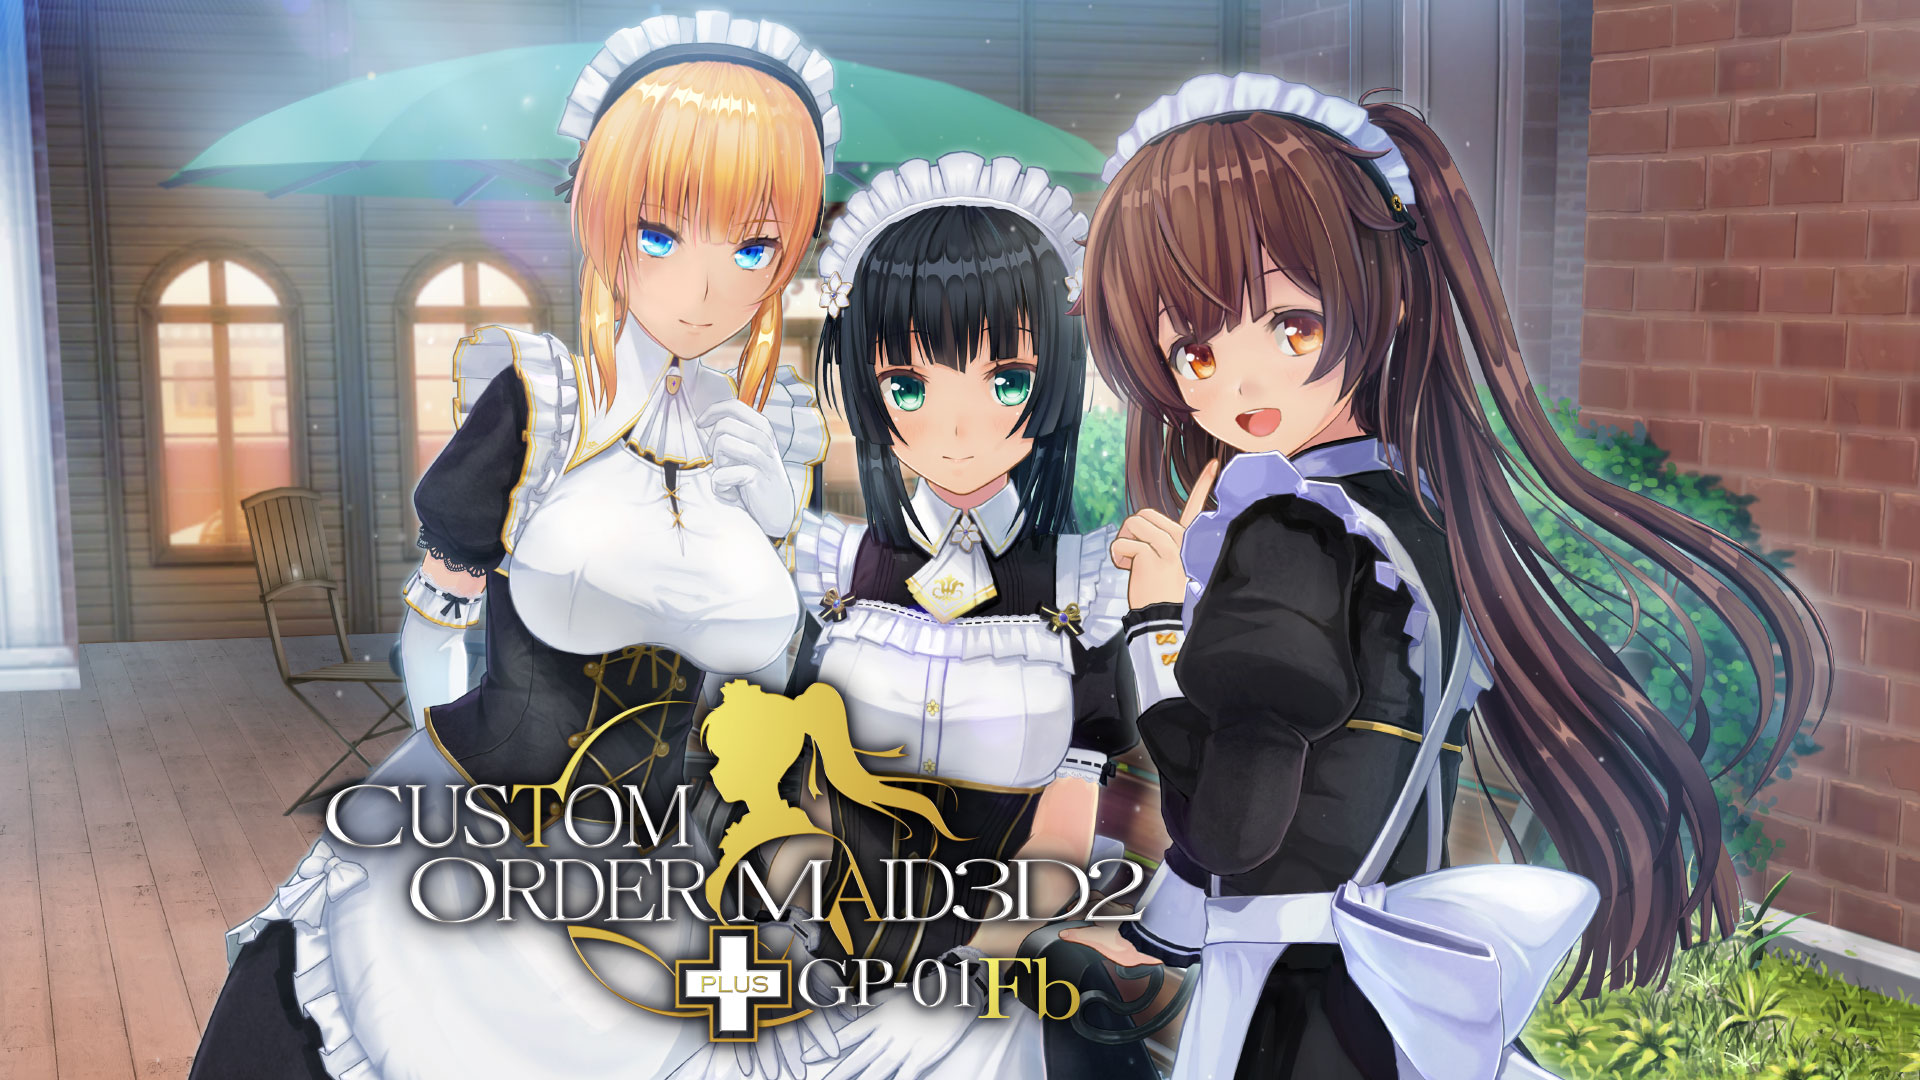 Custom order maid 3d. Custom order Maid 3d 2. Горничная на троих. Custom order Maid 3d2 it's a Night Magic. カスタムオーダーメイド3d2 Cafe Mailish collaboration Maid Set IV.